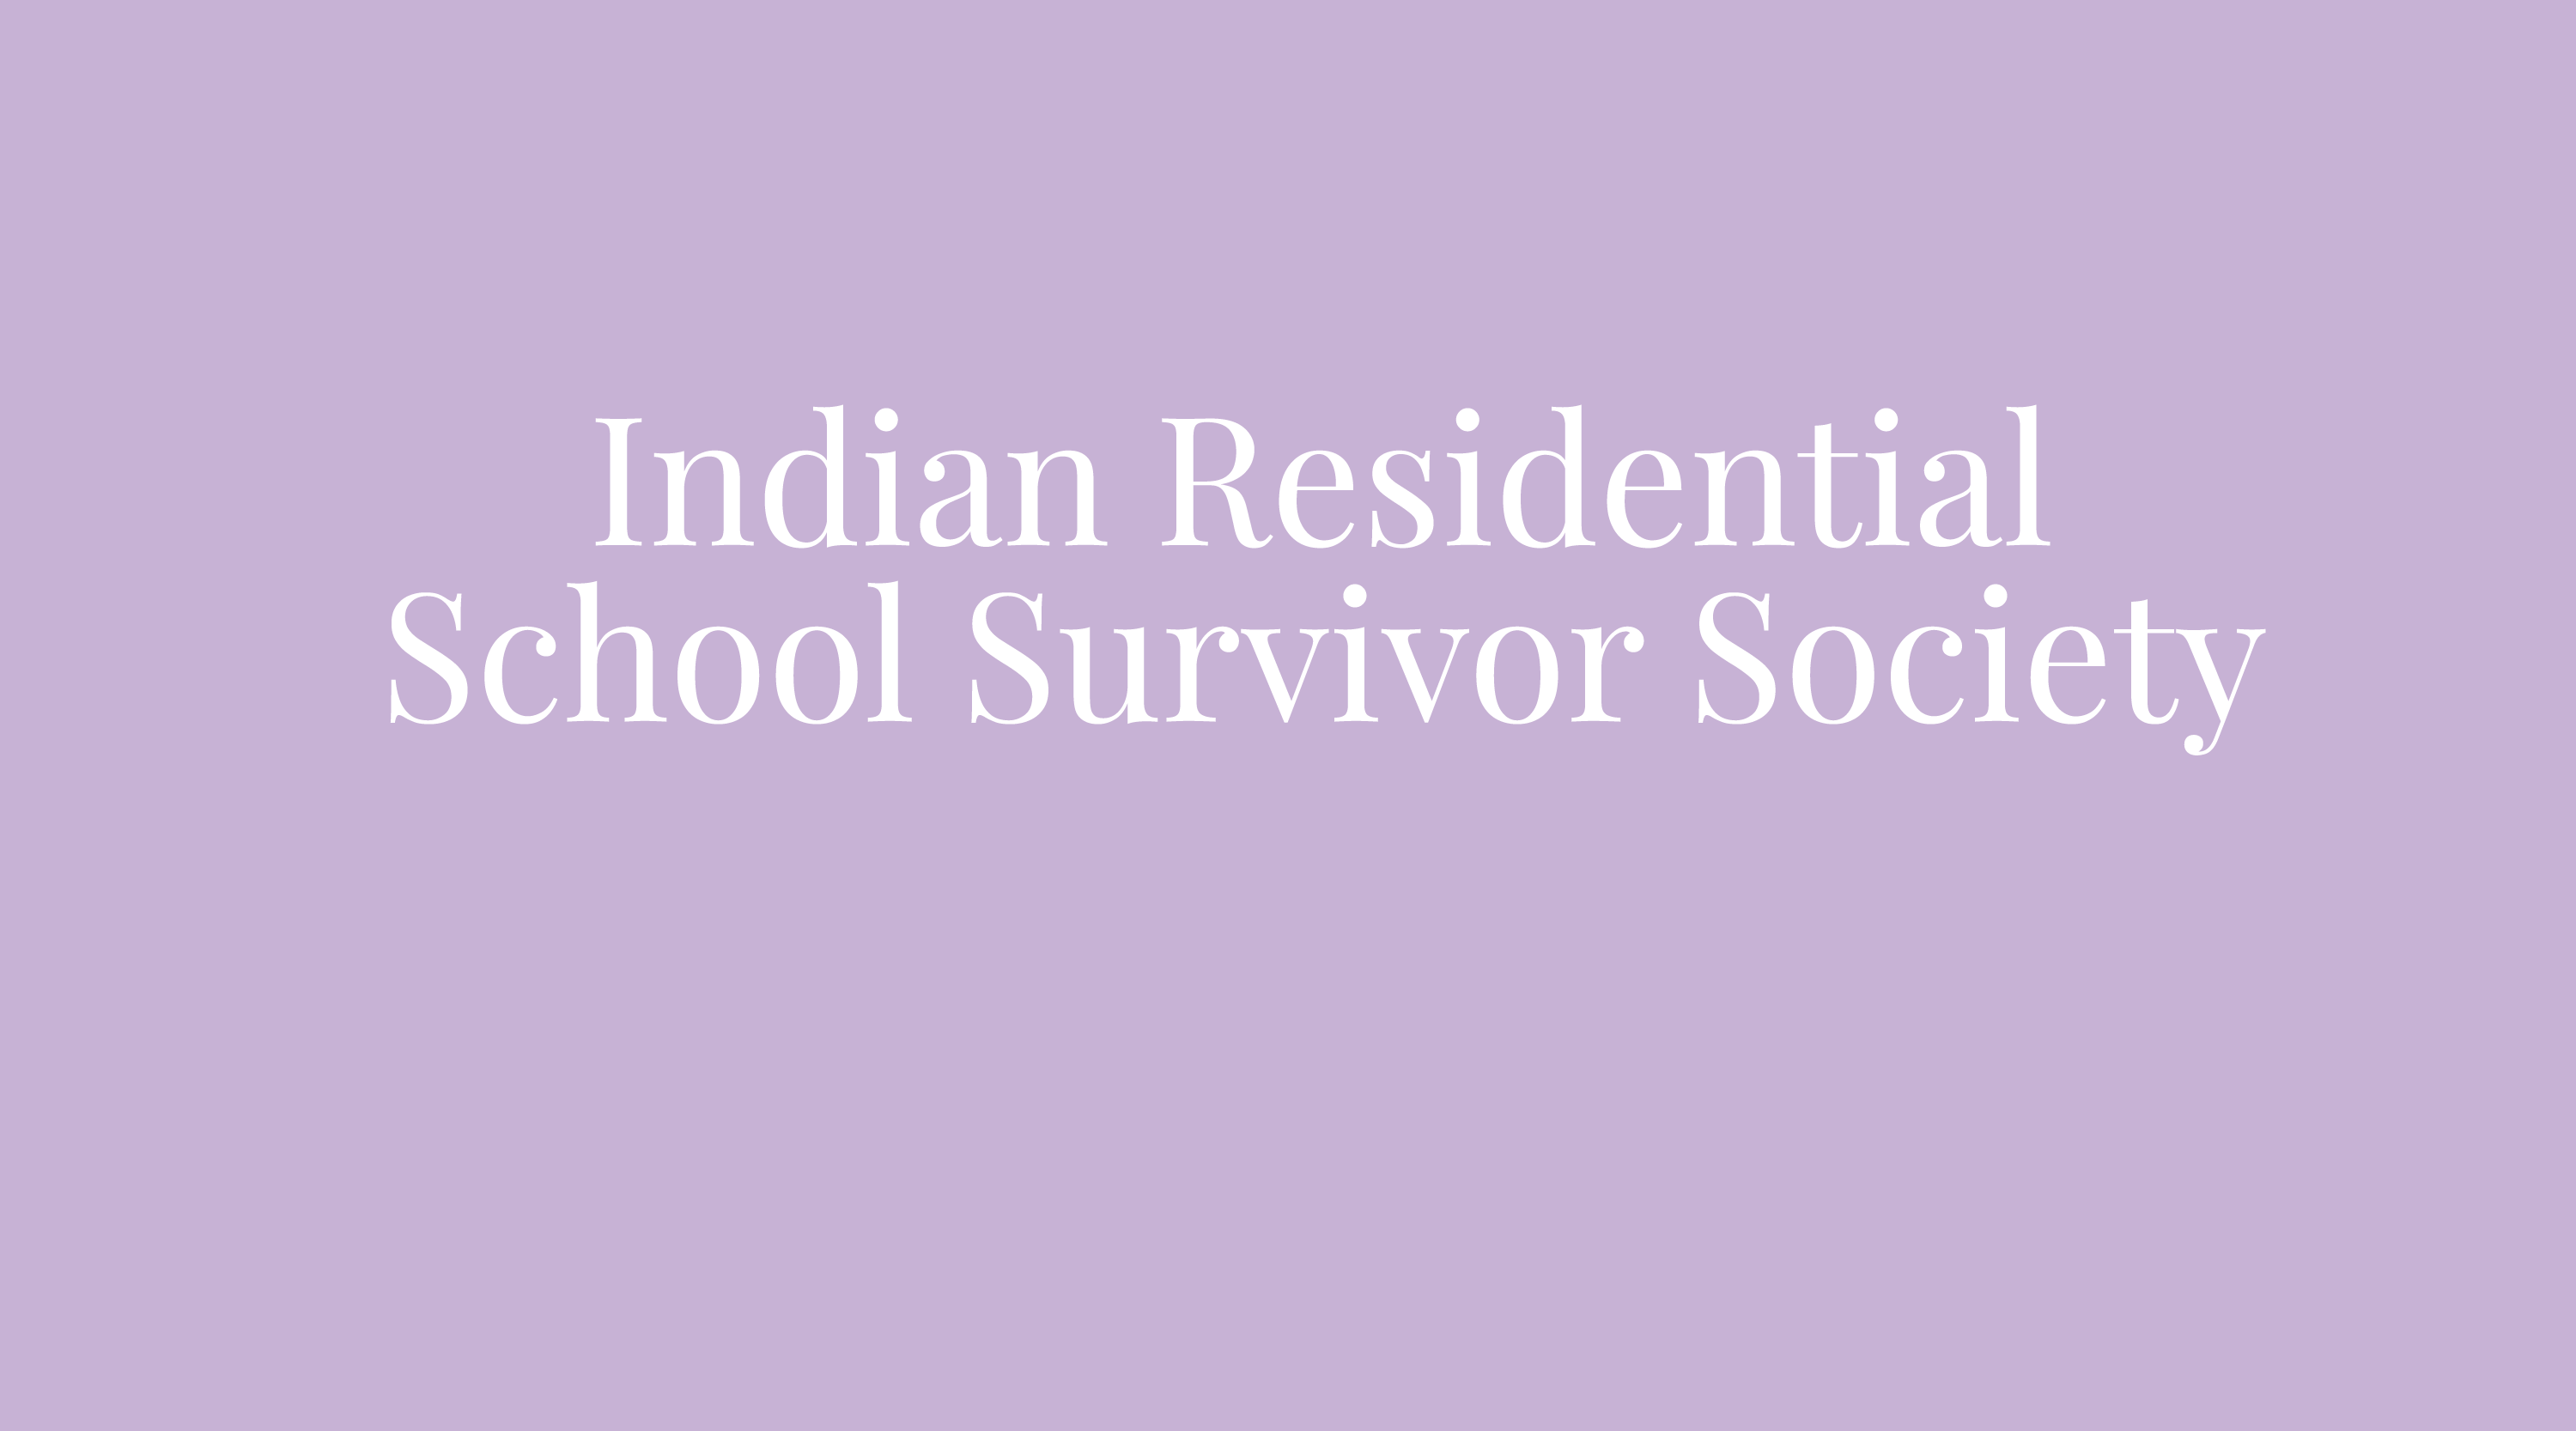 Our October Non-Profit - Indian Residential School Survivor Society